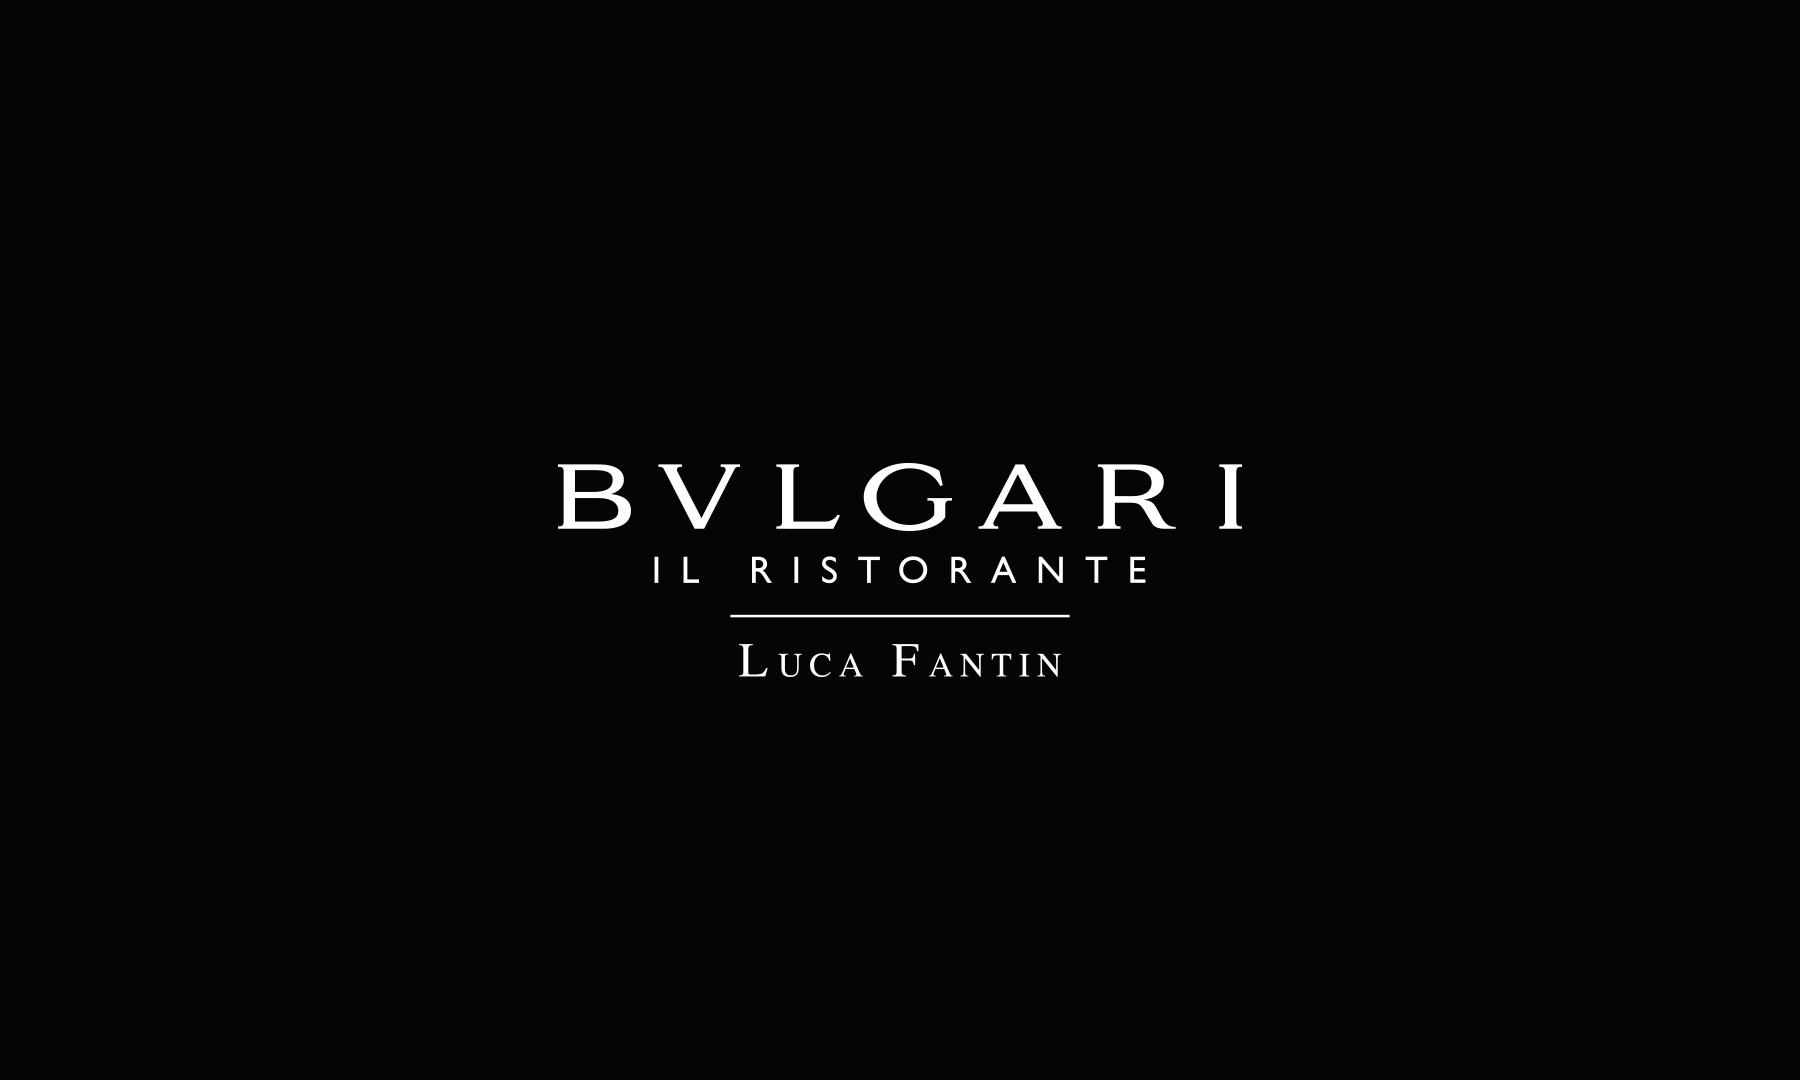 BVLGARI Il Ristorante Luca Fantin 新商品プレスローンチイベントの2枚目のカバー画像